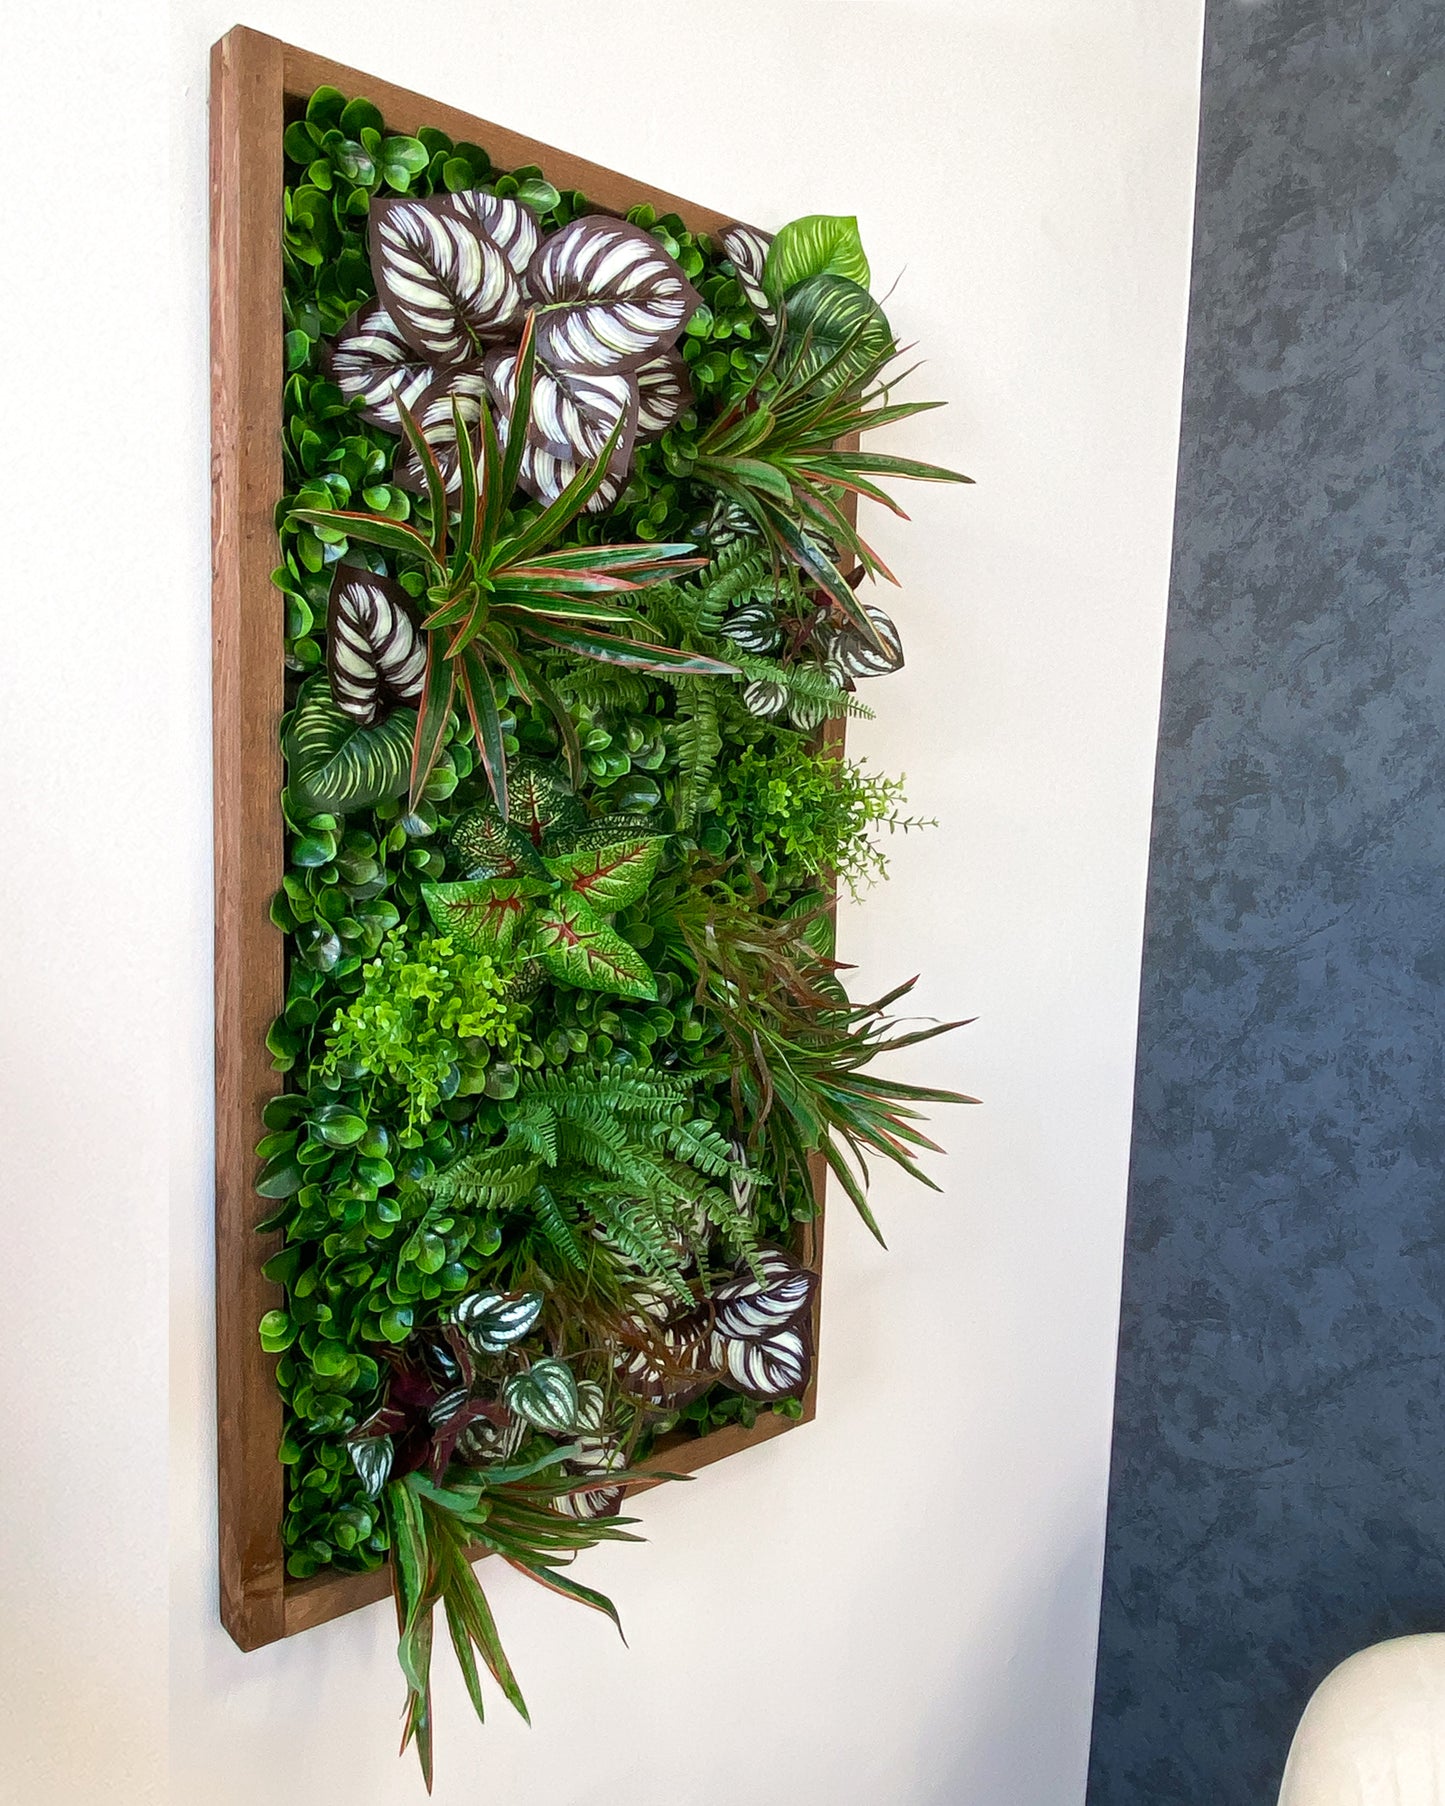 Plantframe/Pflanzenwand/Mooswand "SORNA" aus Realtouch Kunstpflanzen in Fichtenholzrahmen